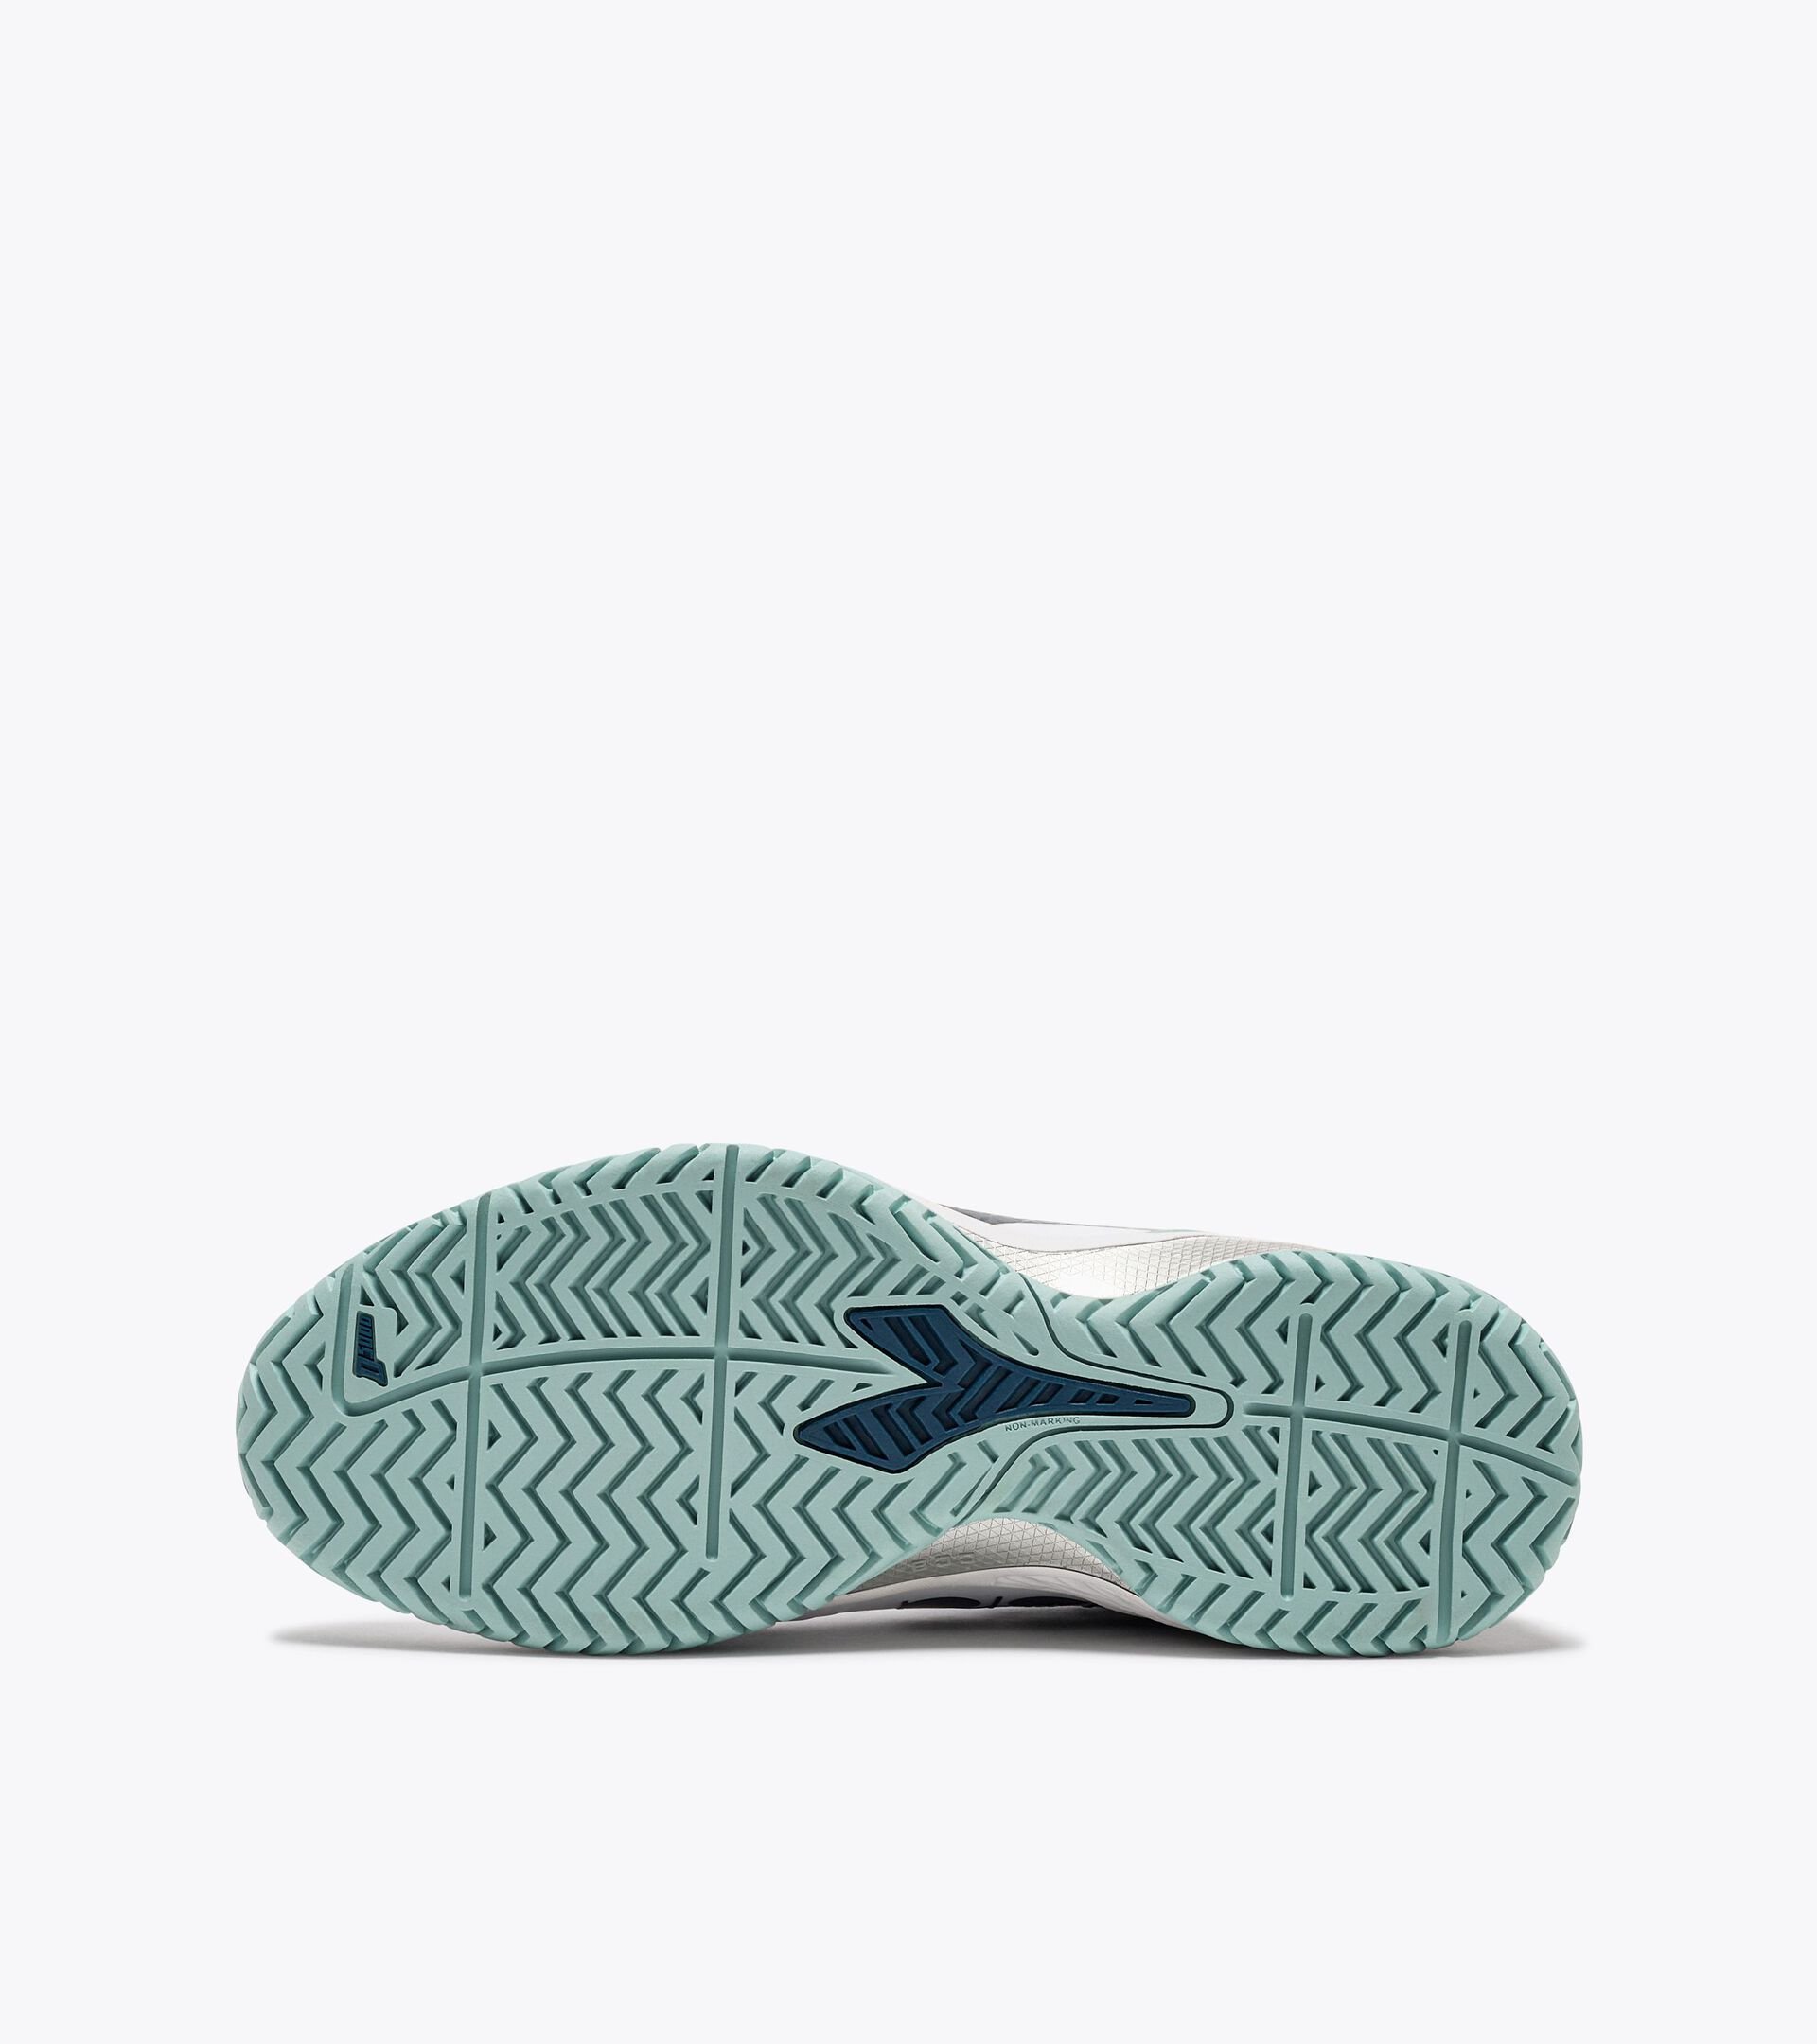 Tennis shoes for hard surfaces or clay courts - Women BLUSHIELD TORNEO 2 W AG WHITE/LEGION BLUE/SURF SPRAY - Diadora